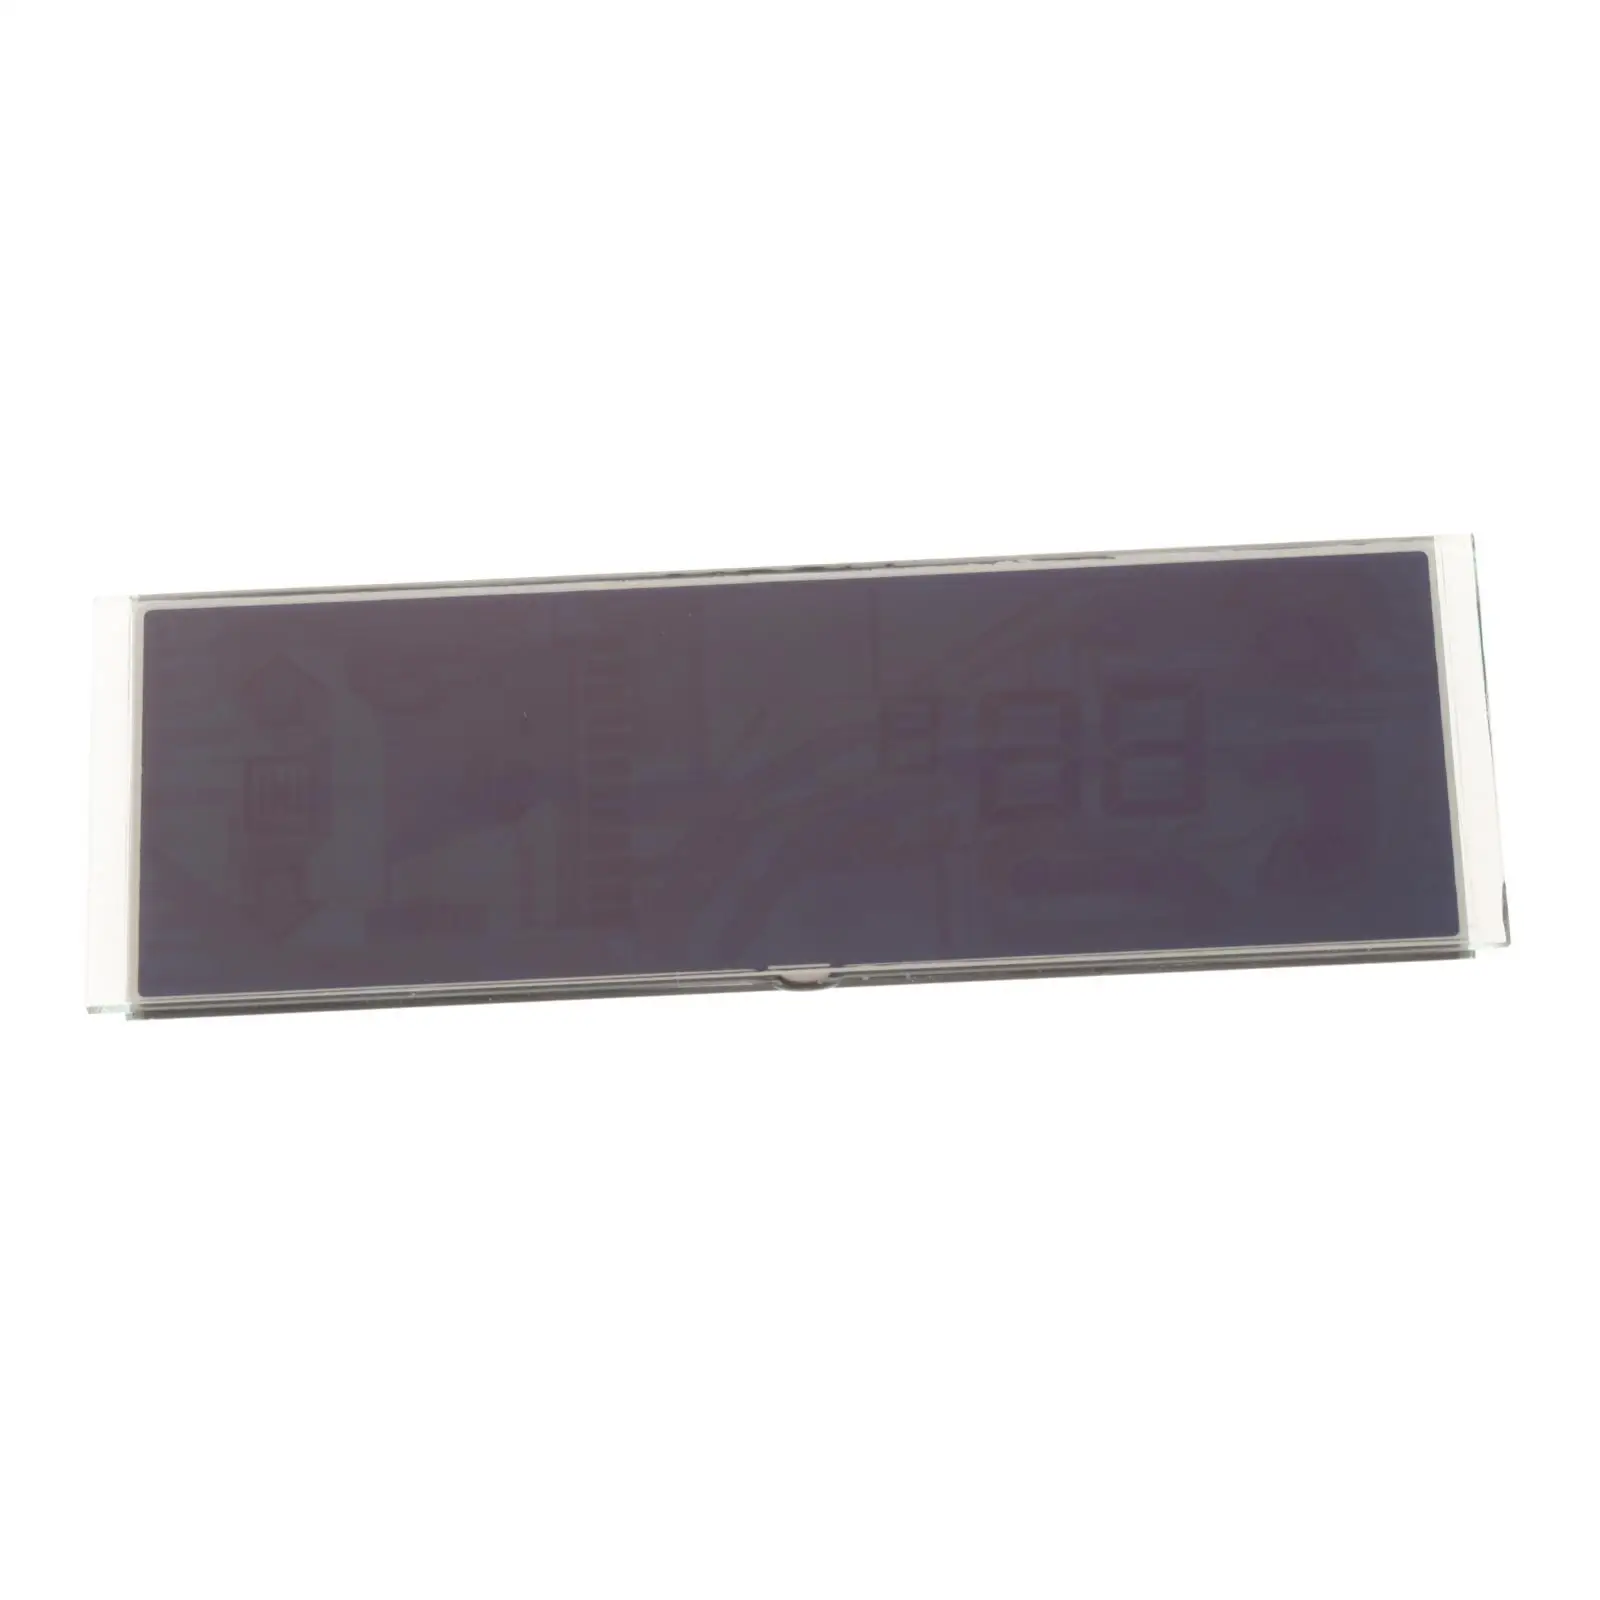 Display Replacement Repair LCD  for 911 996, 986 996, Ruf R Ruf 3400 S 1999-2002 Ruf 